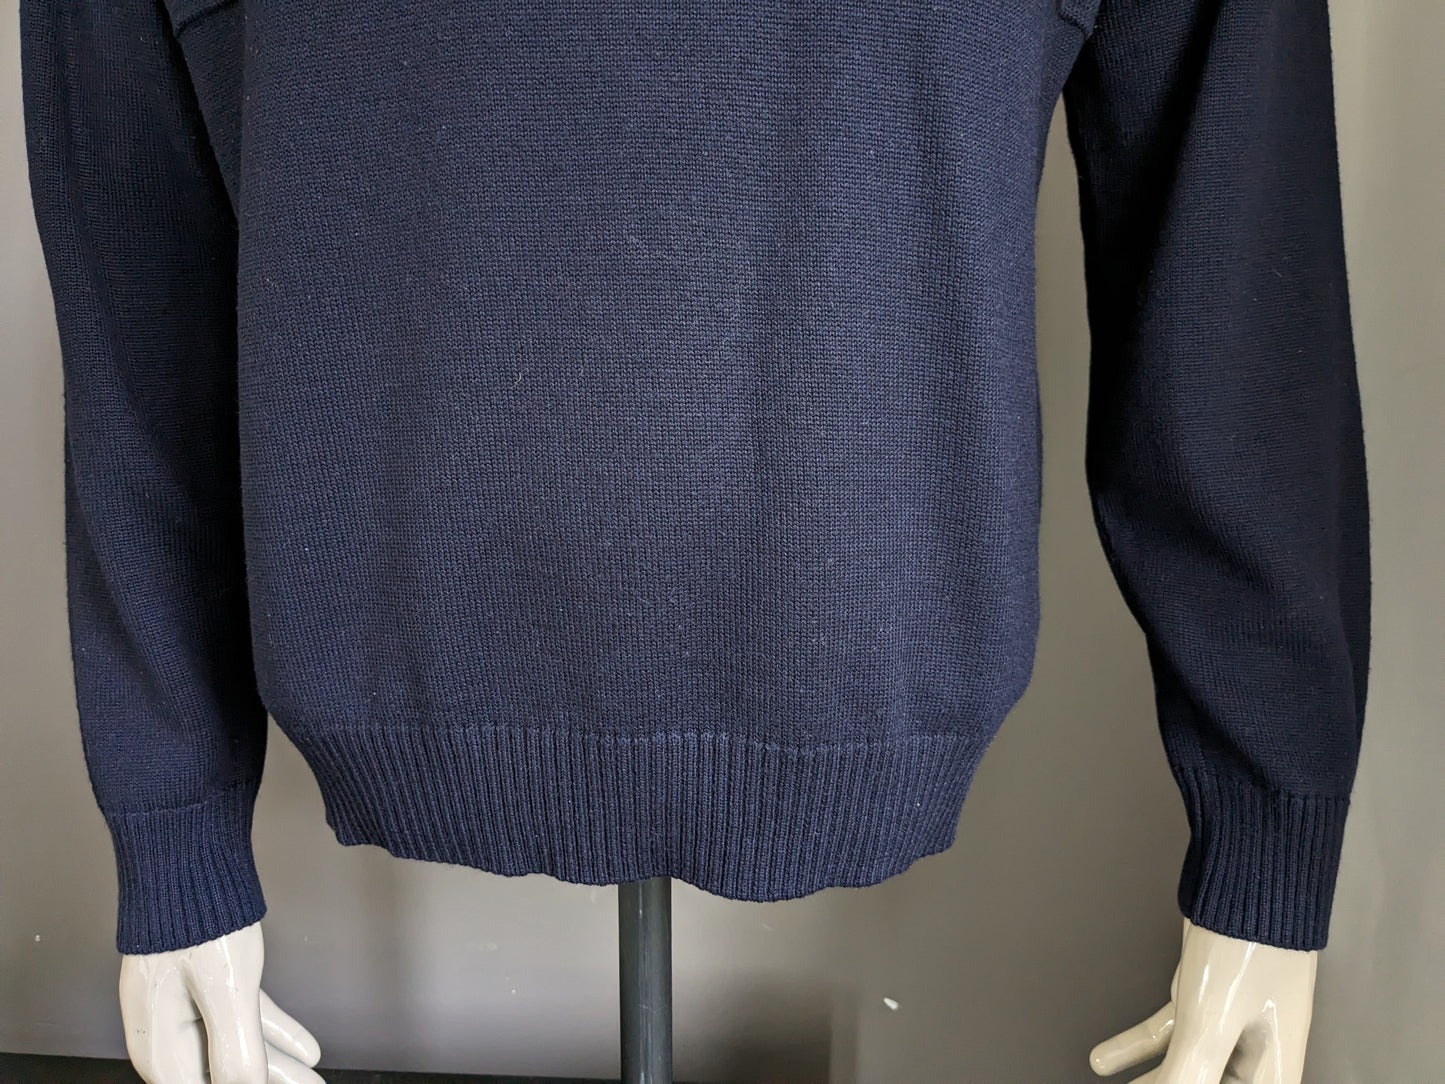 Vintage bexleys merino wool sweater. Dark blue gray red colored. Size L.